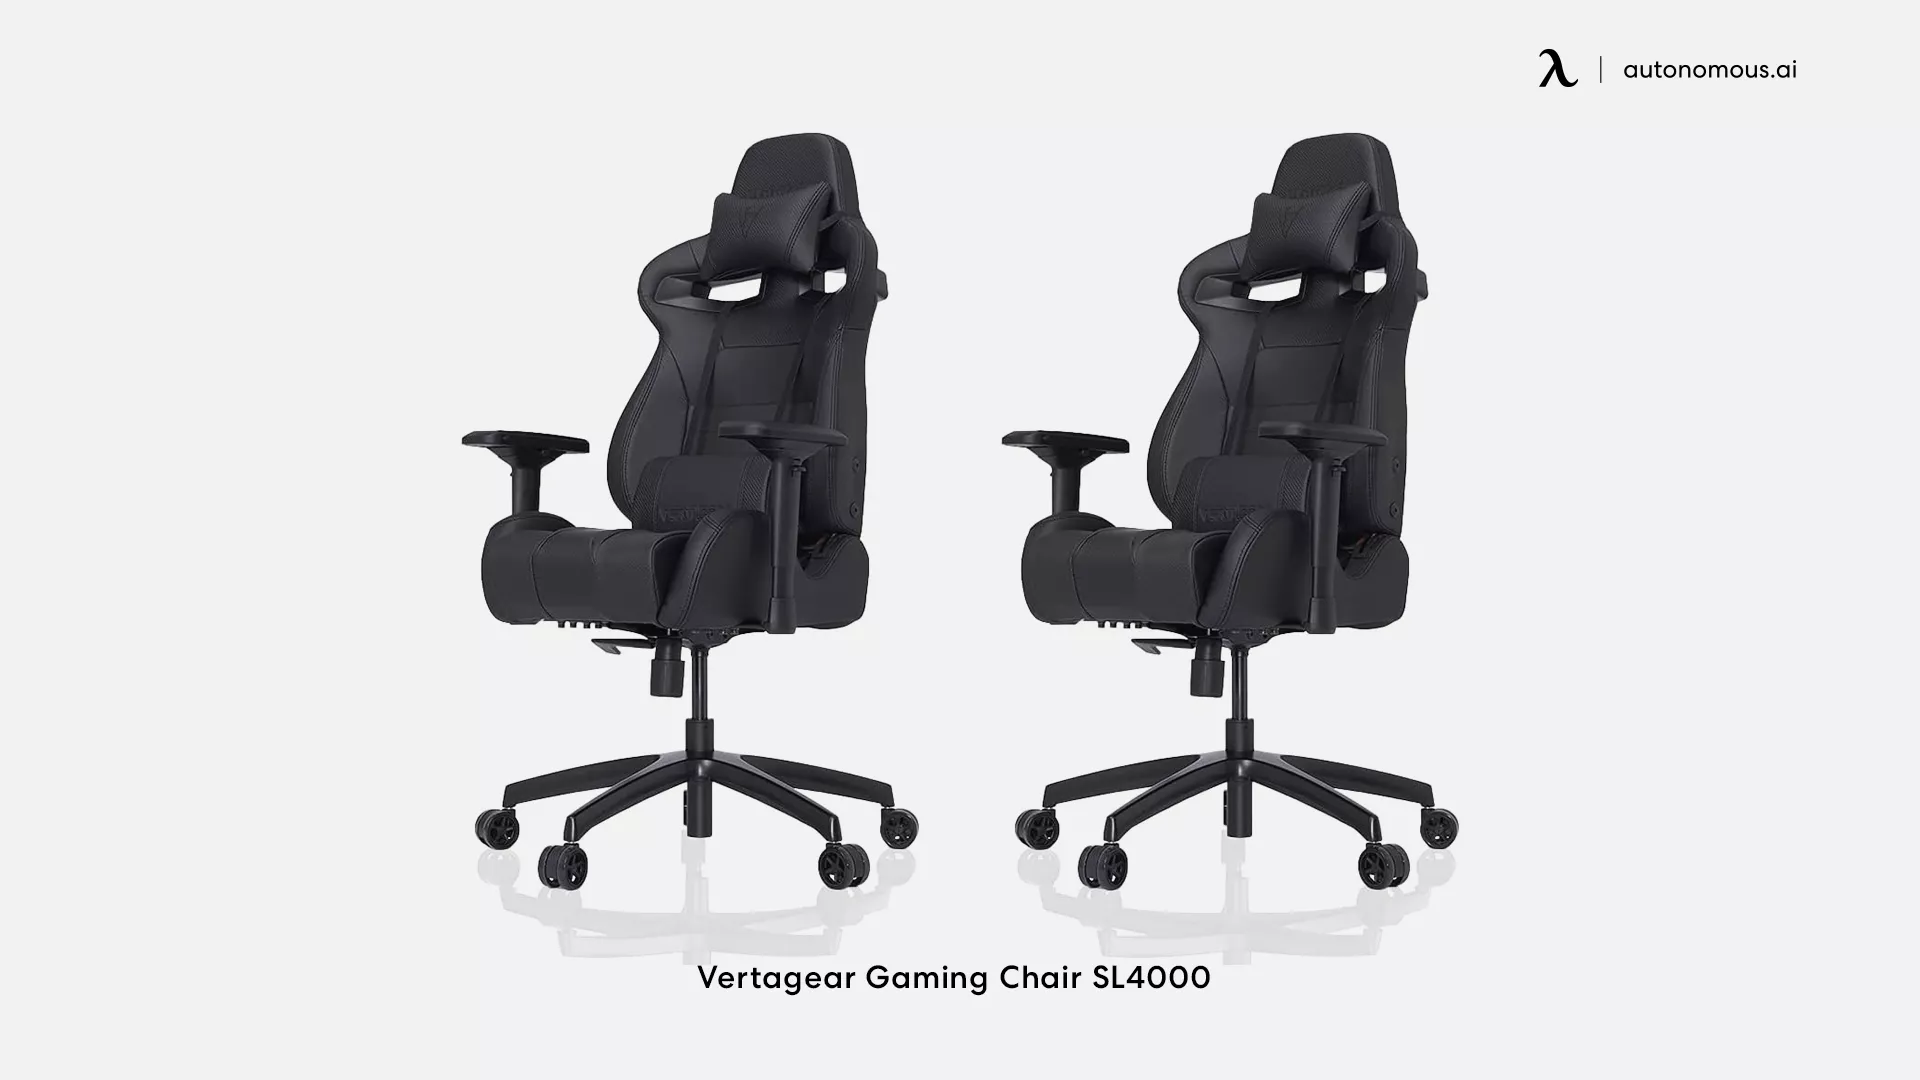 Vertagear Gaming Chair SL4000 black gaming chair